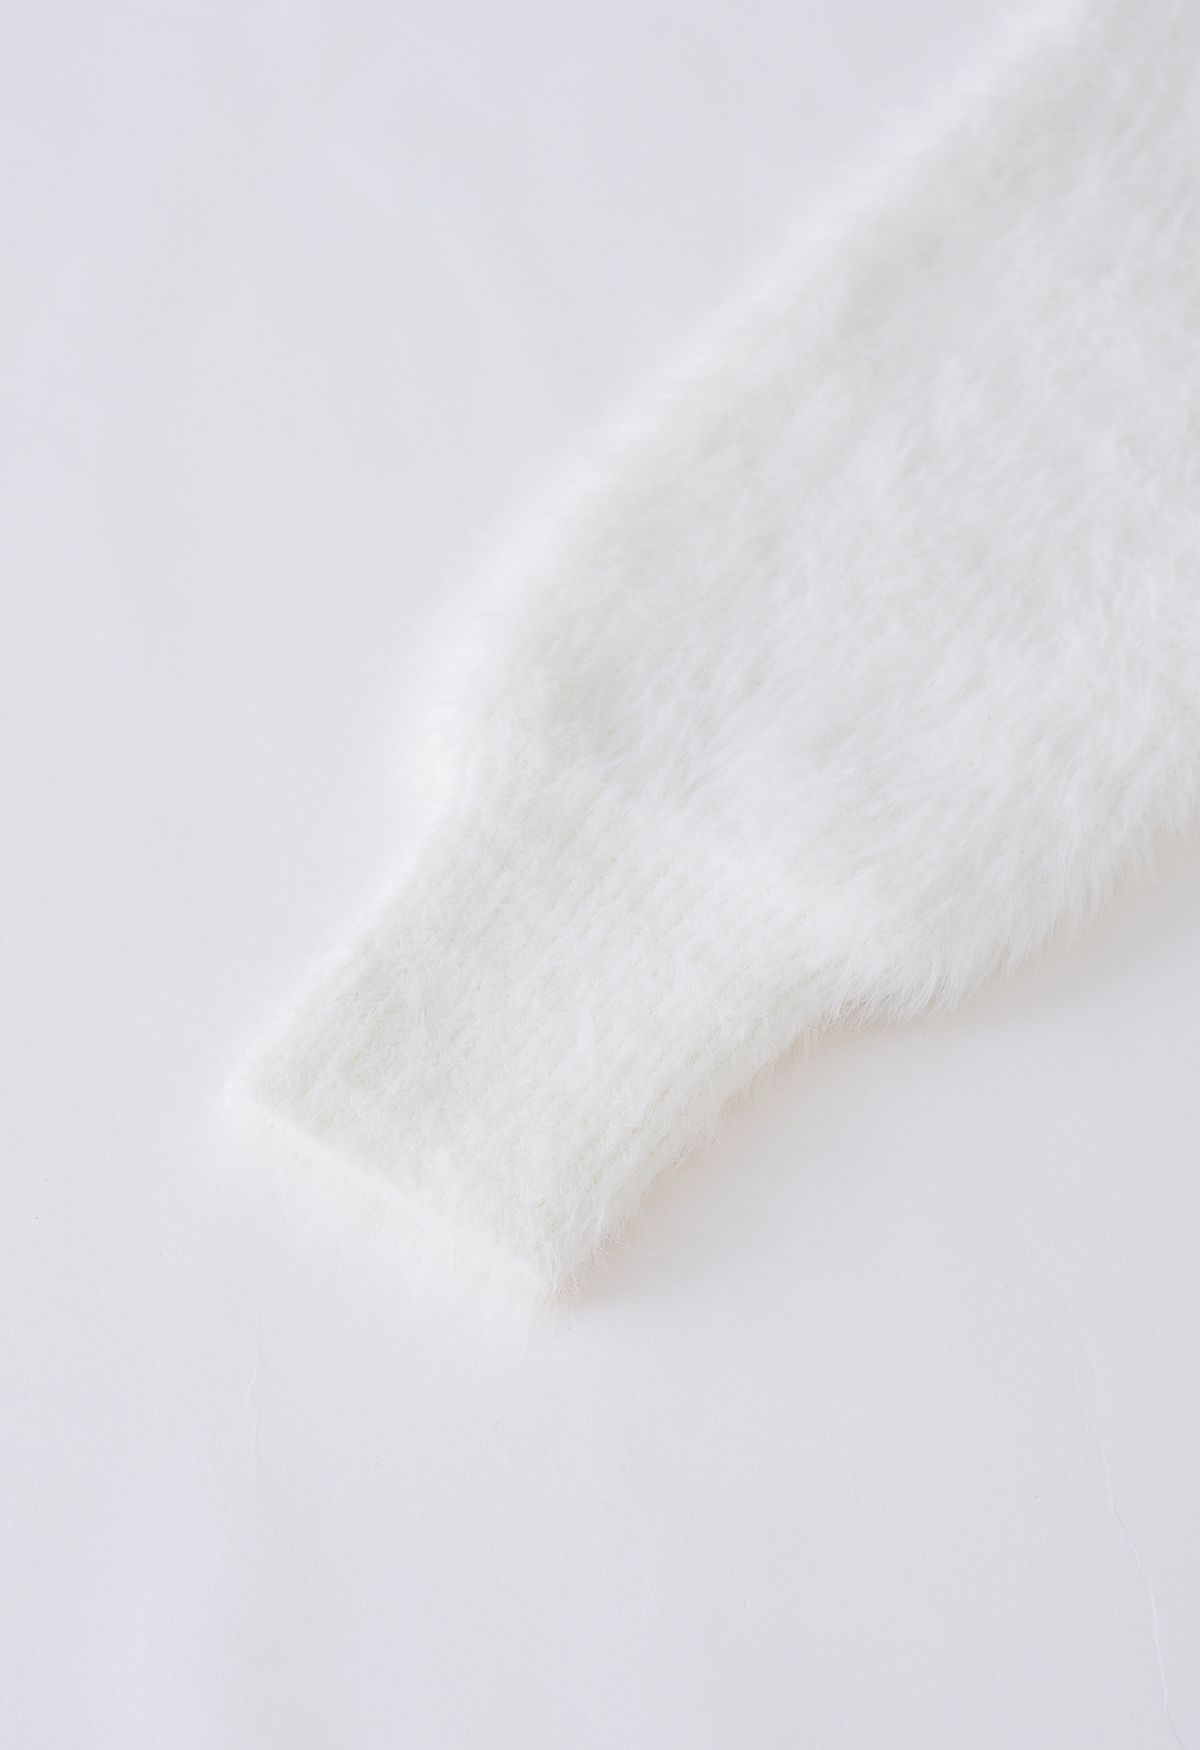 Bowknot Brooch Fuzzy Knit Cardigan in Weiß